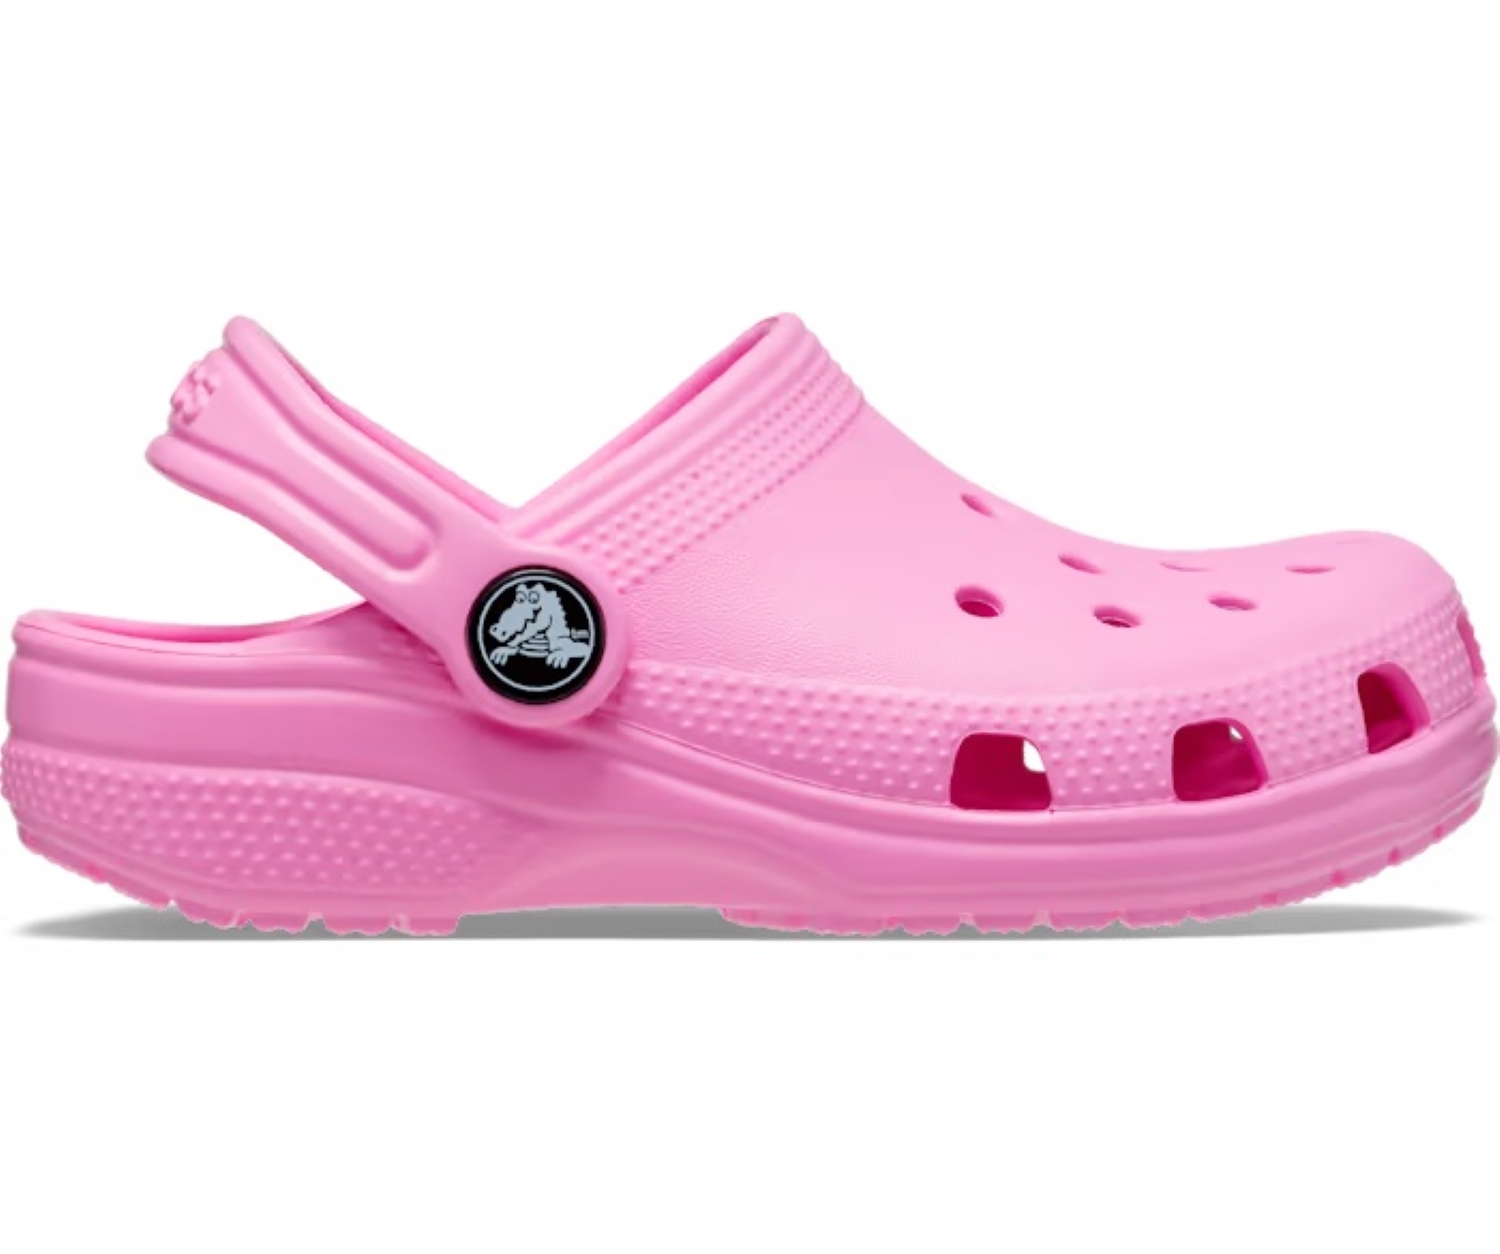 Crocs - CLASSIC CLOG T - TAFFY PINK Παιδικά > Παπούτσια > Clogs > Glogs